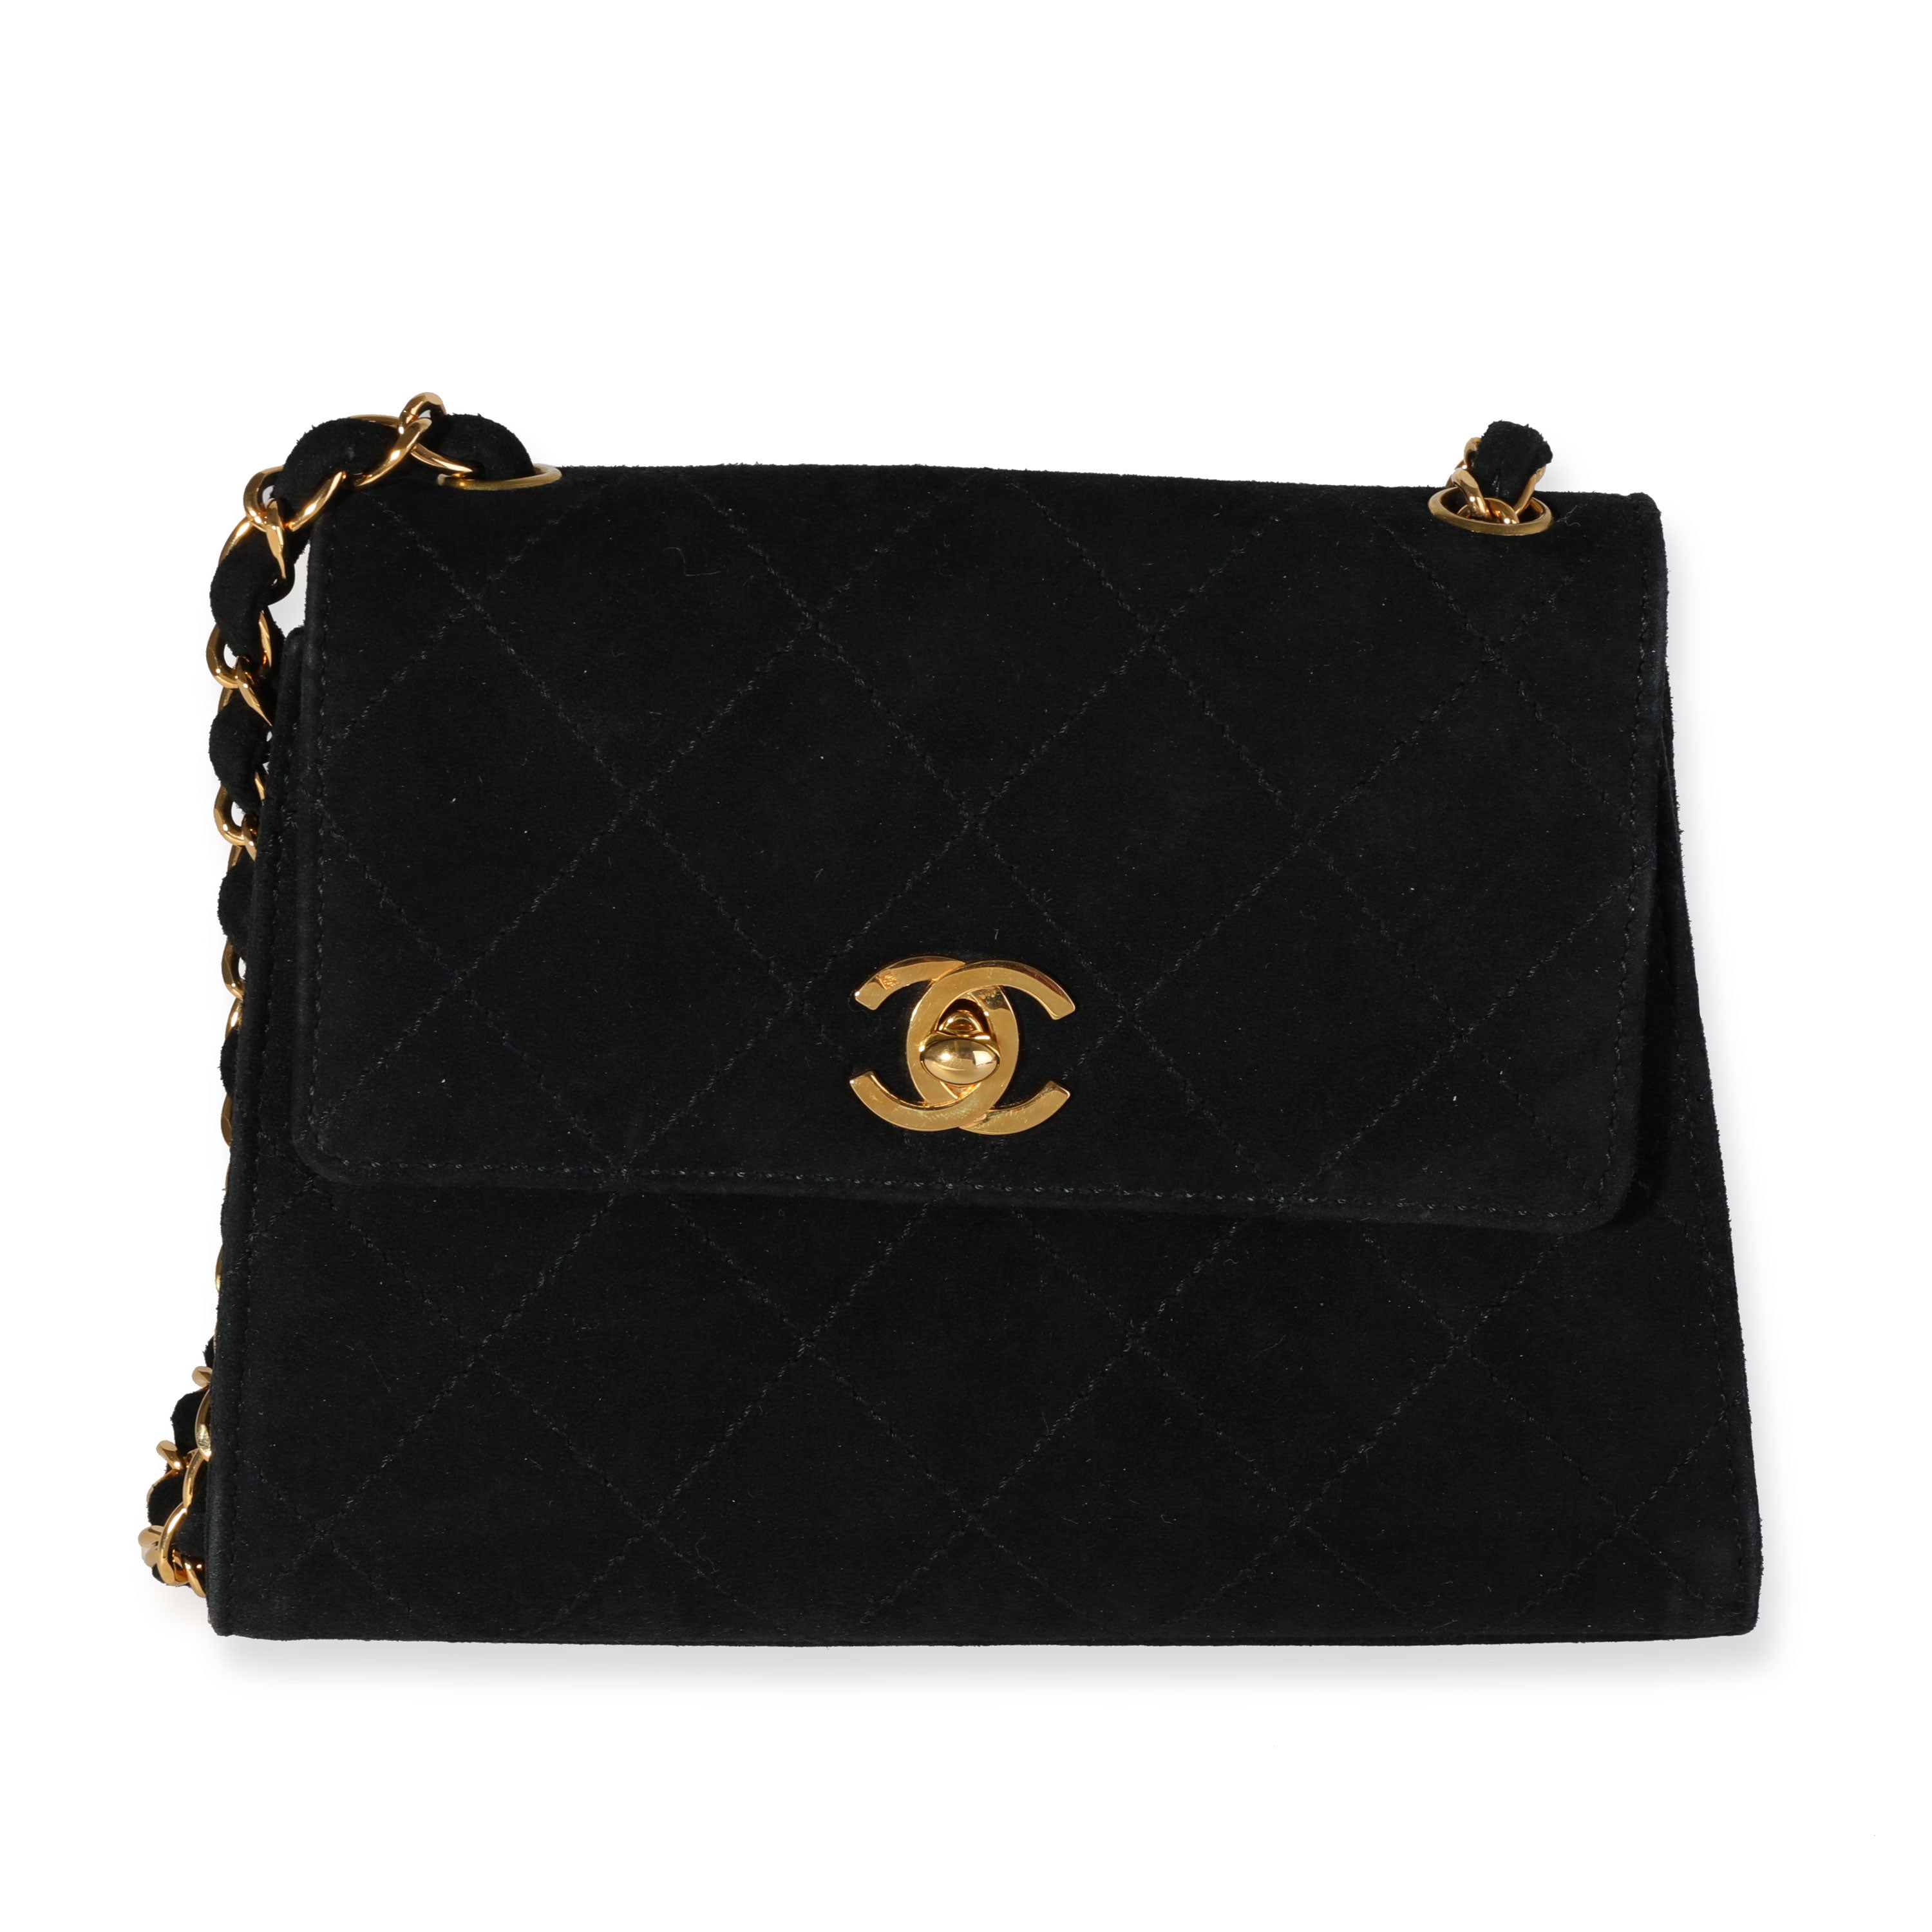 Chanel Nylon Bag - 144 For Sale on 1stDibs